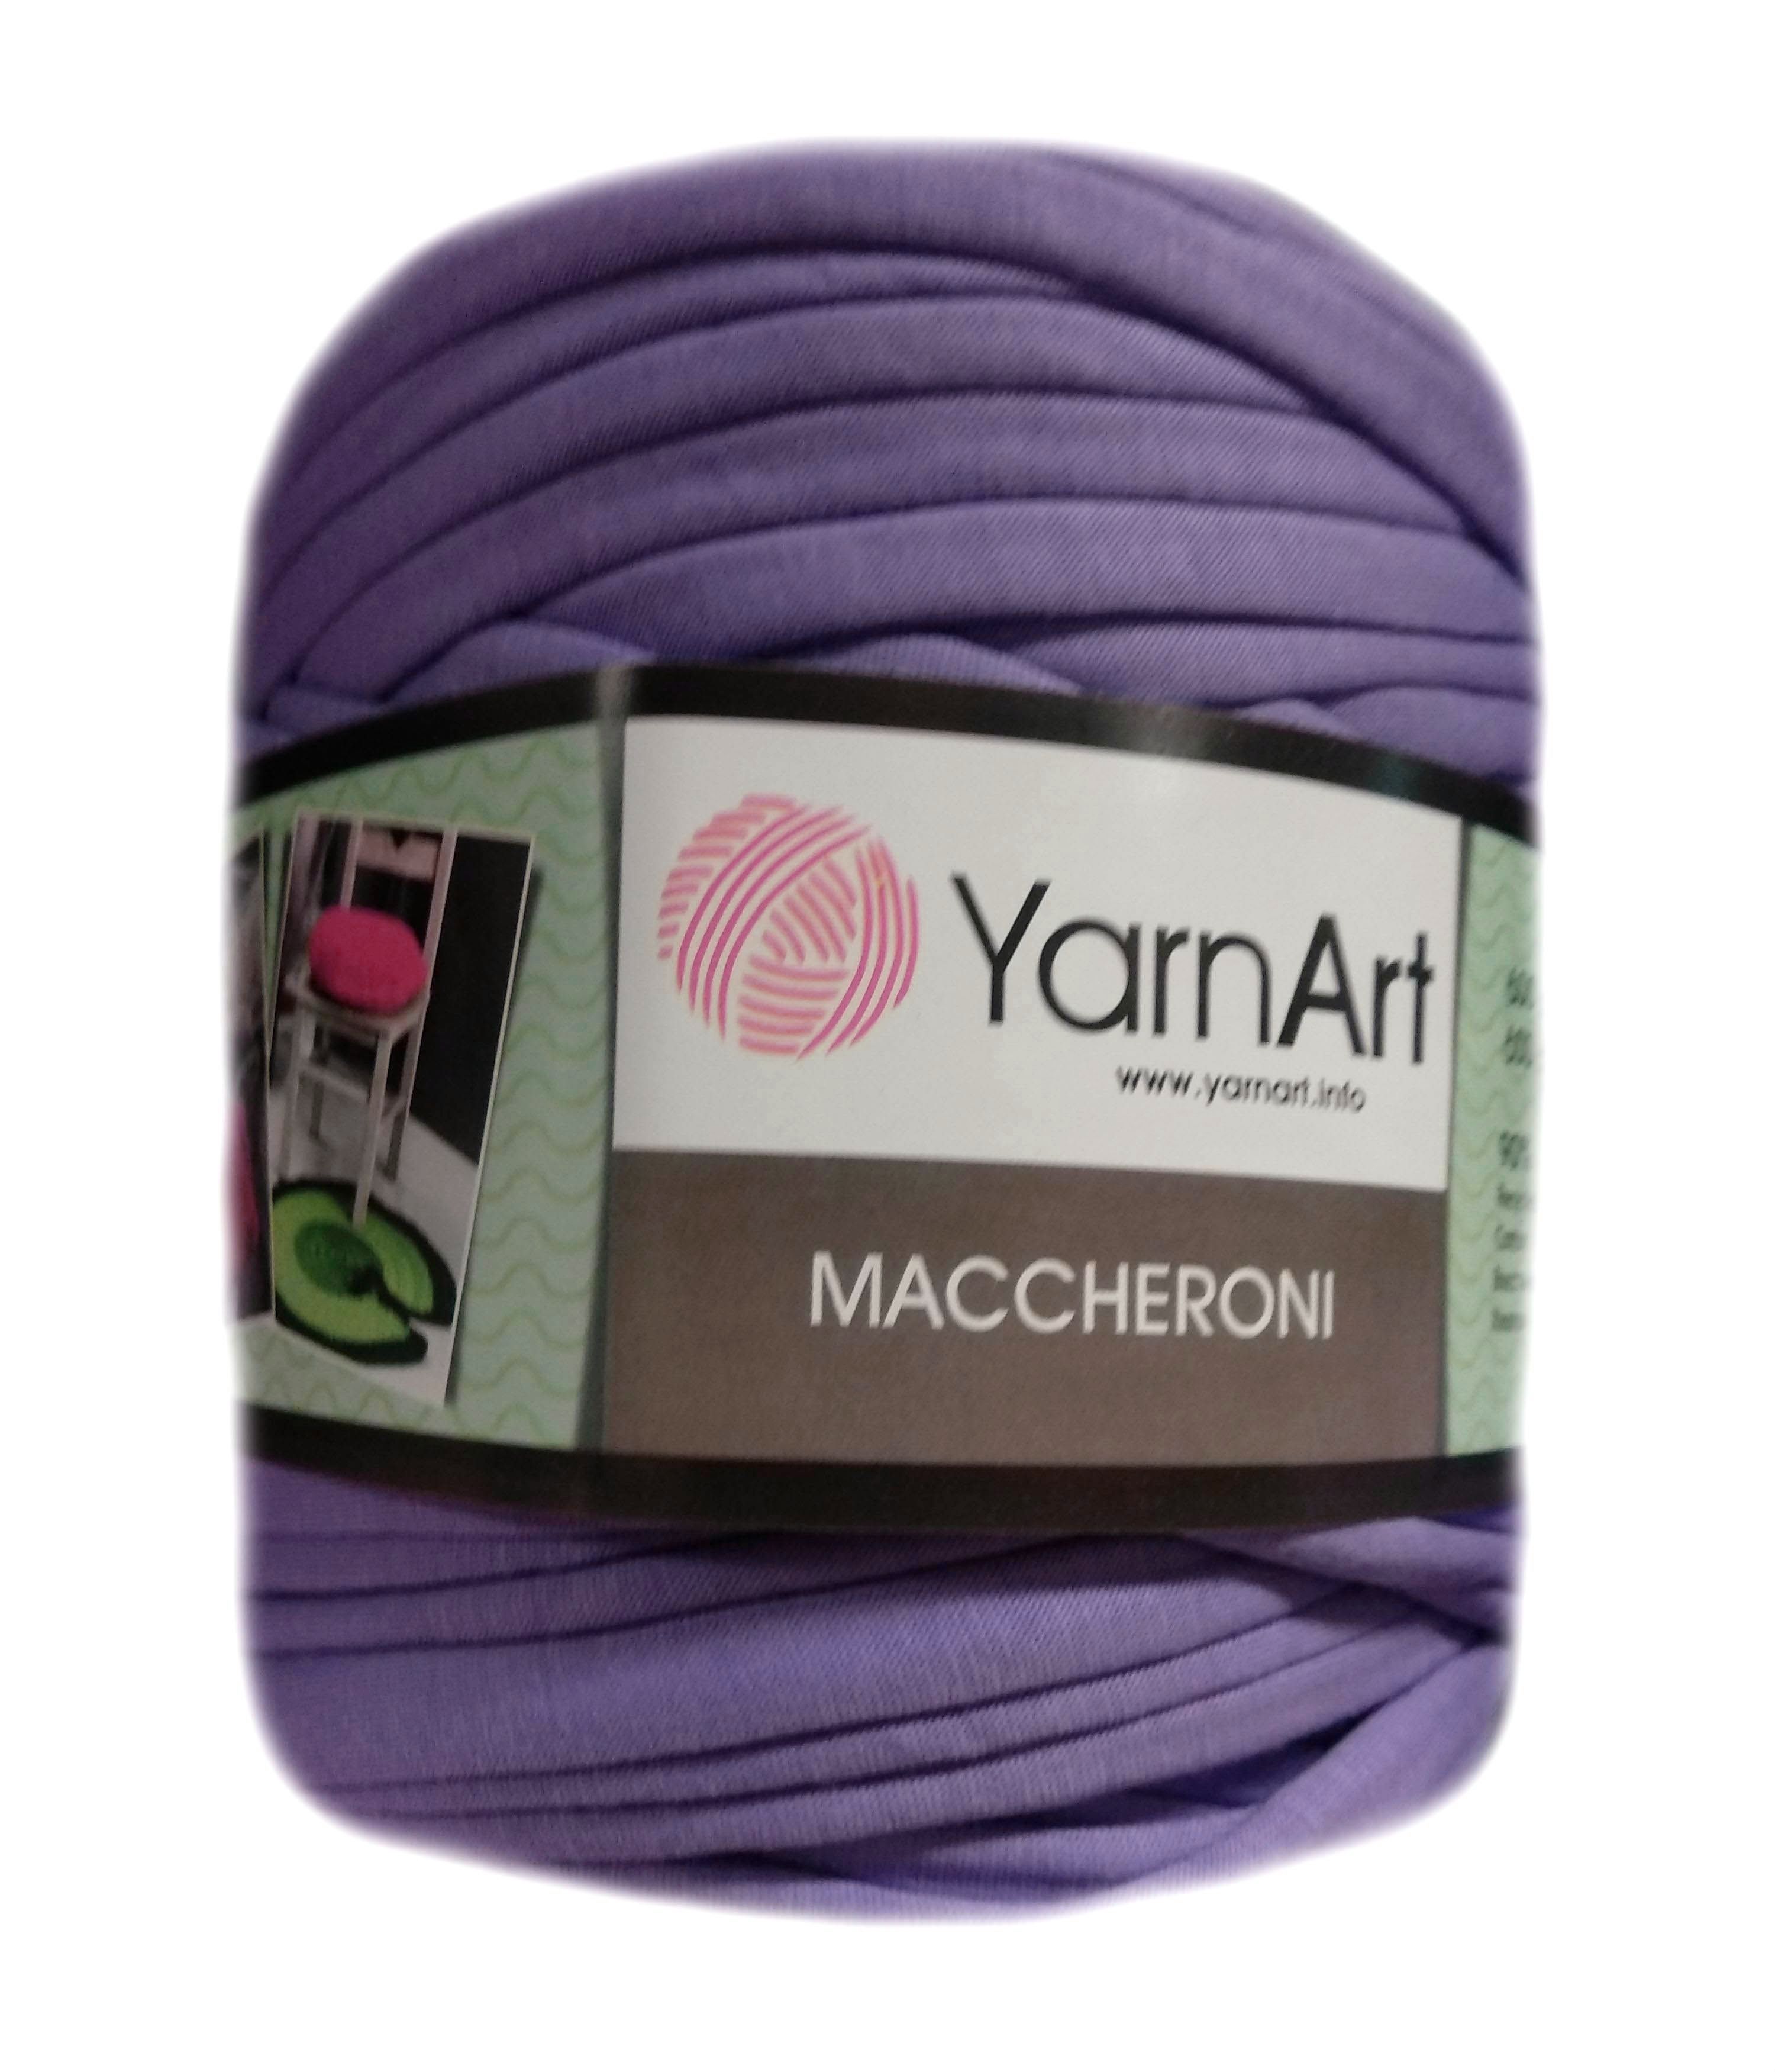 YarnArt MACCHERONI, halvány lila póló fonal.Tű 12-15 mm.